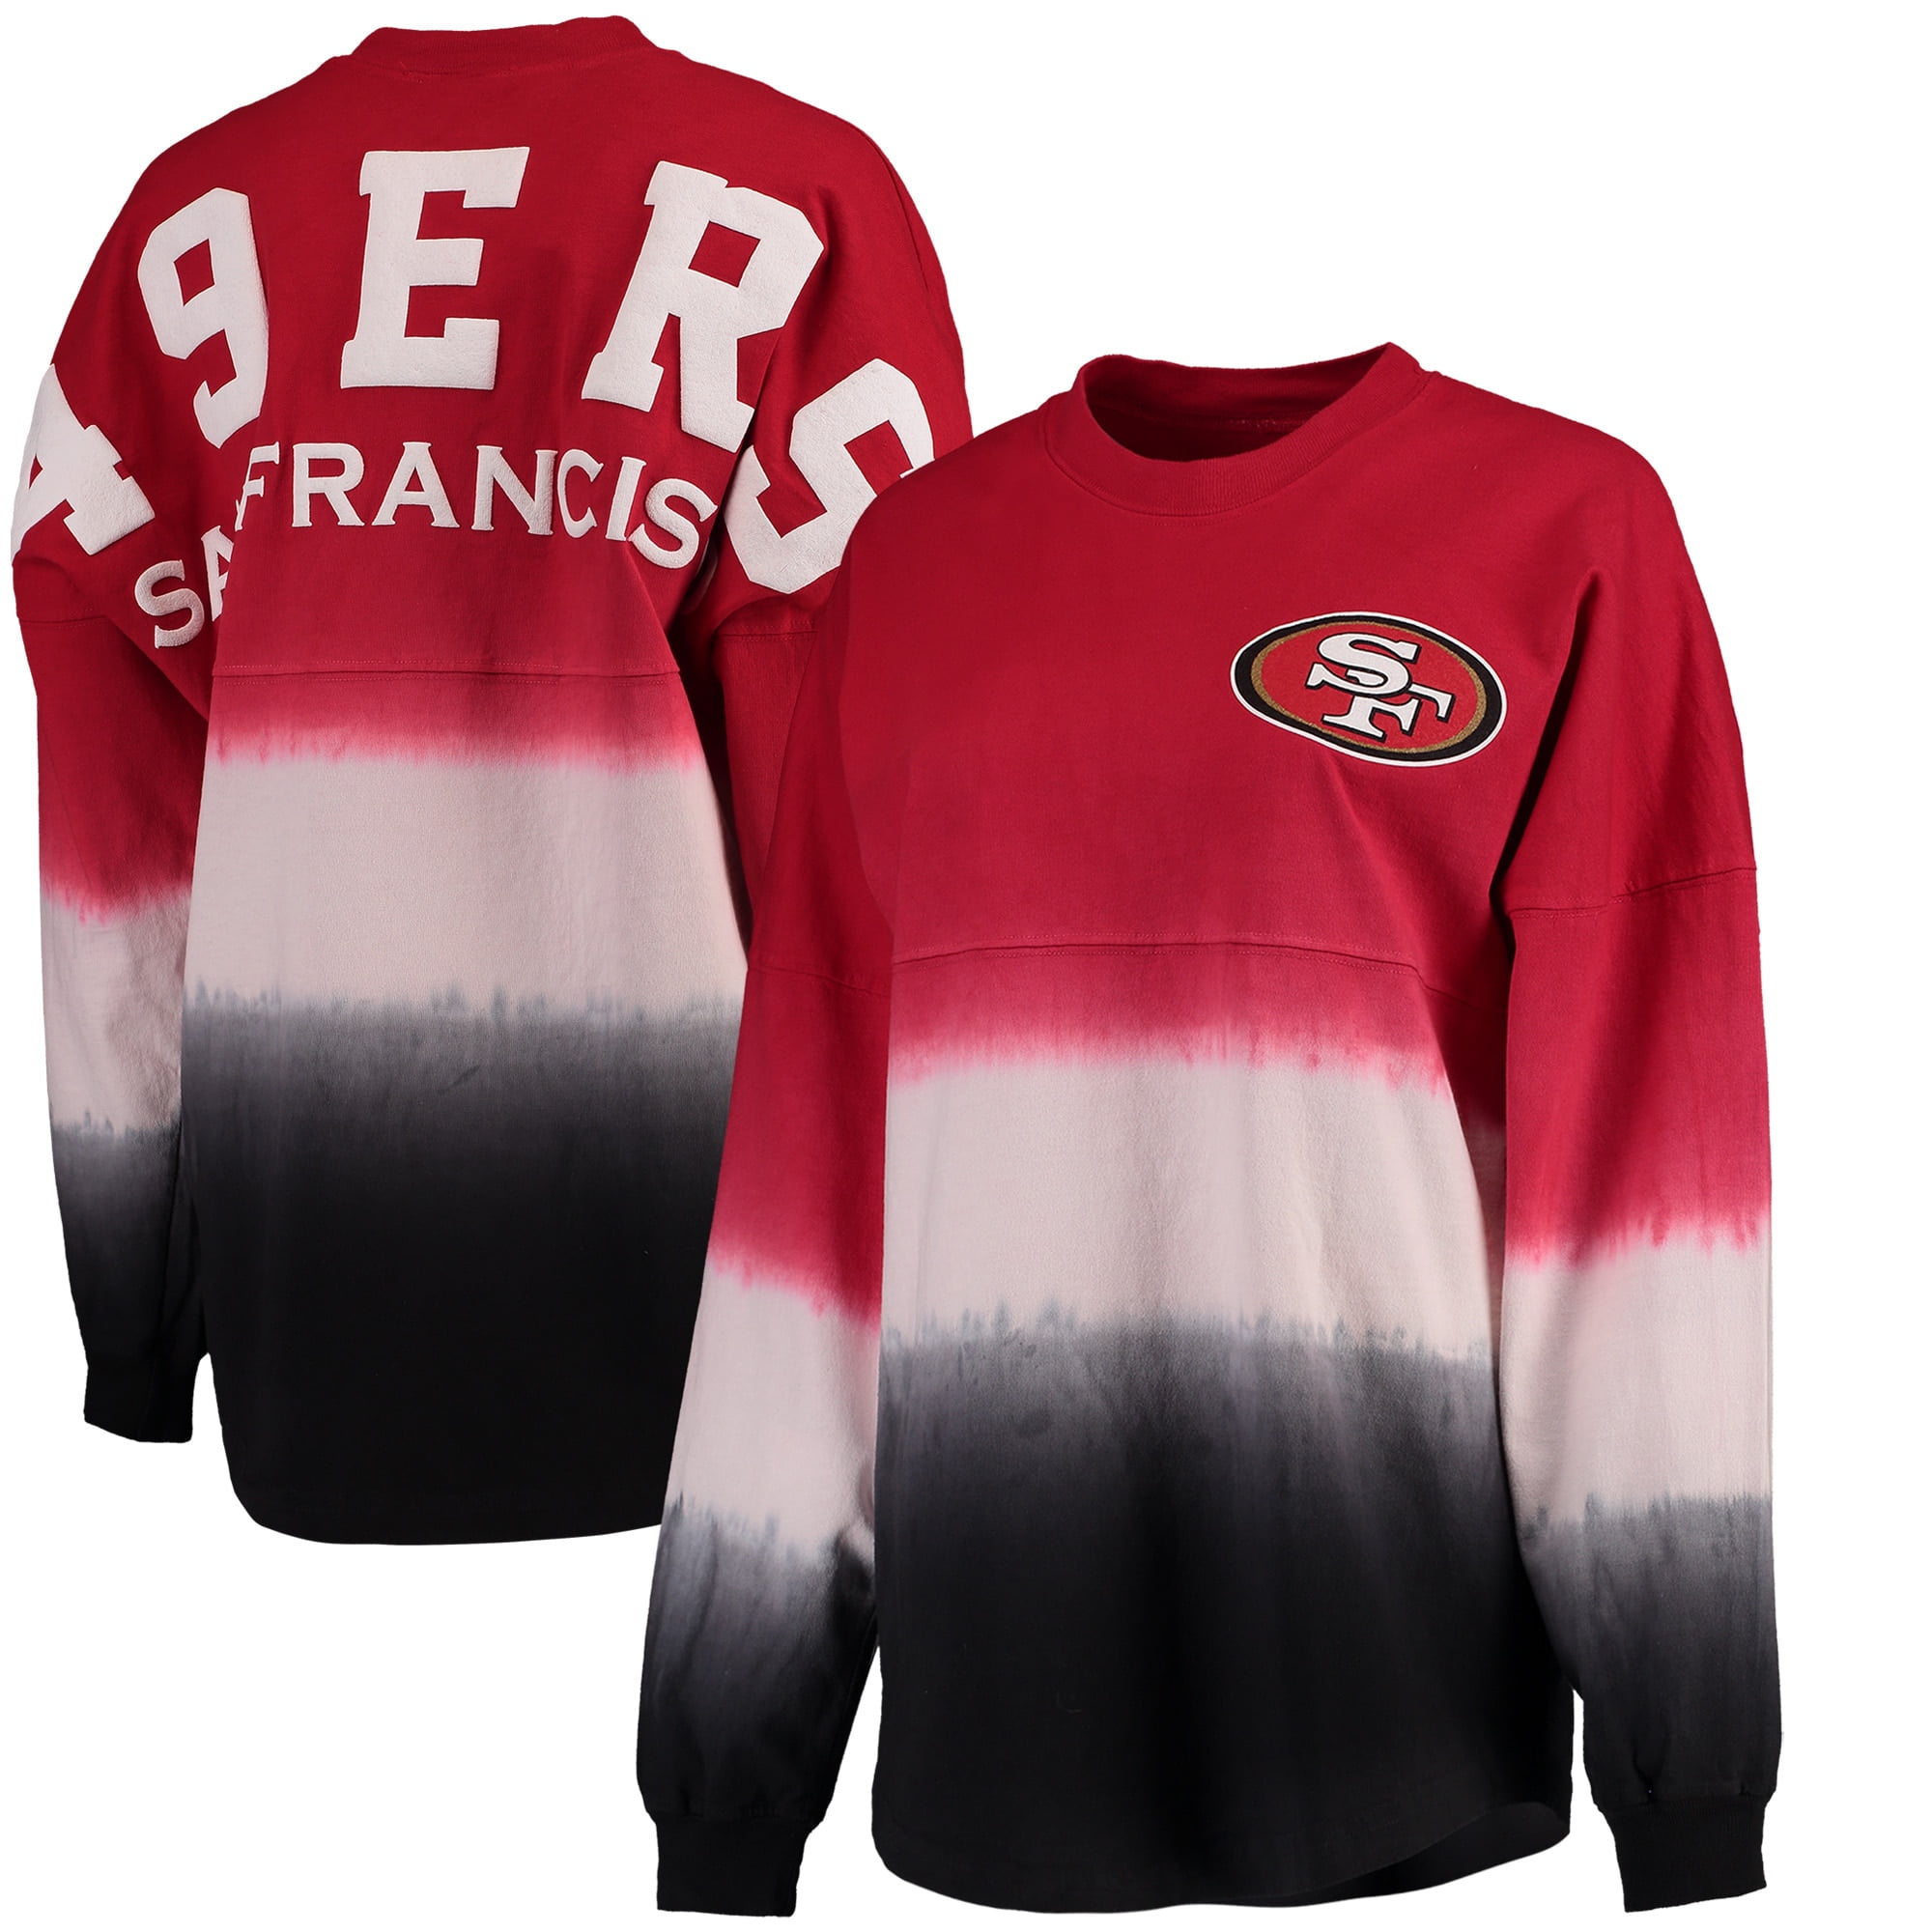 san francisco 49ers womens jersey